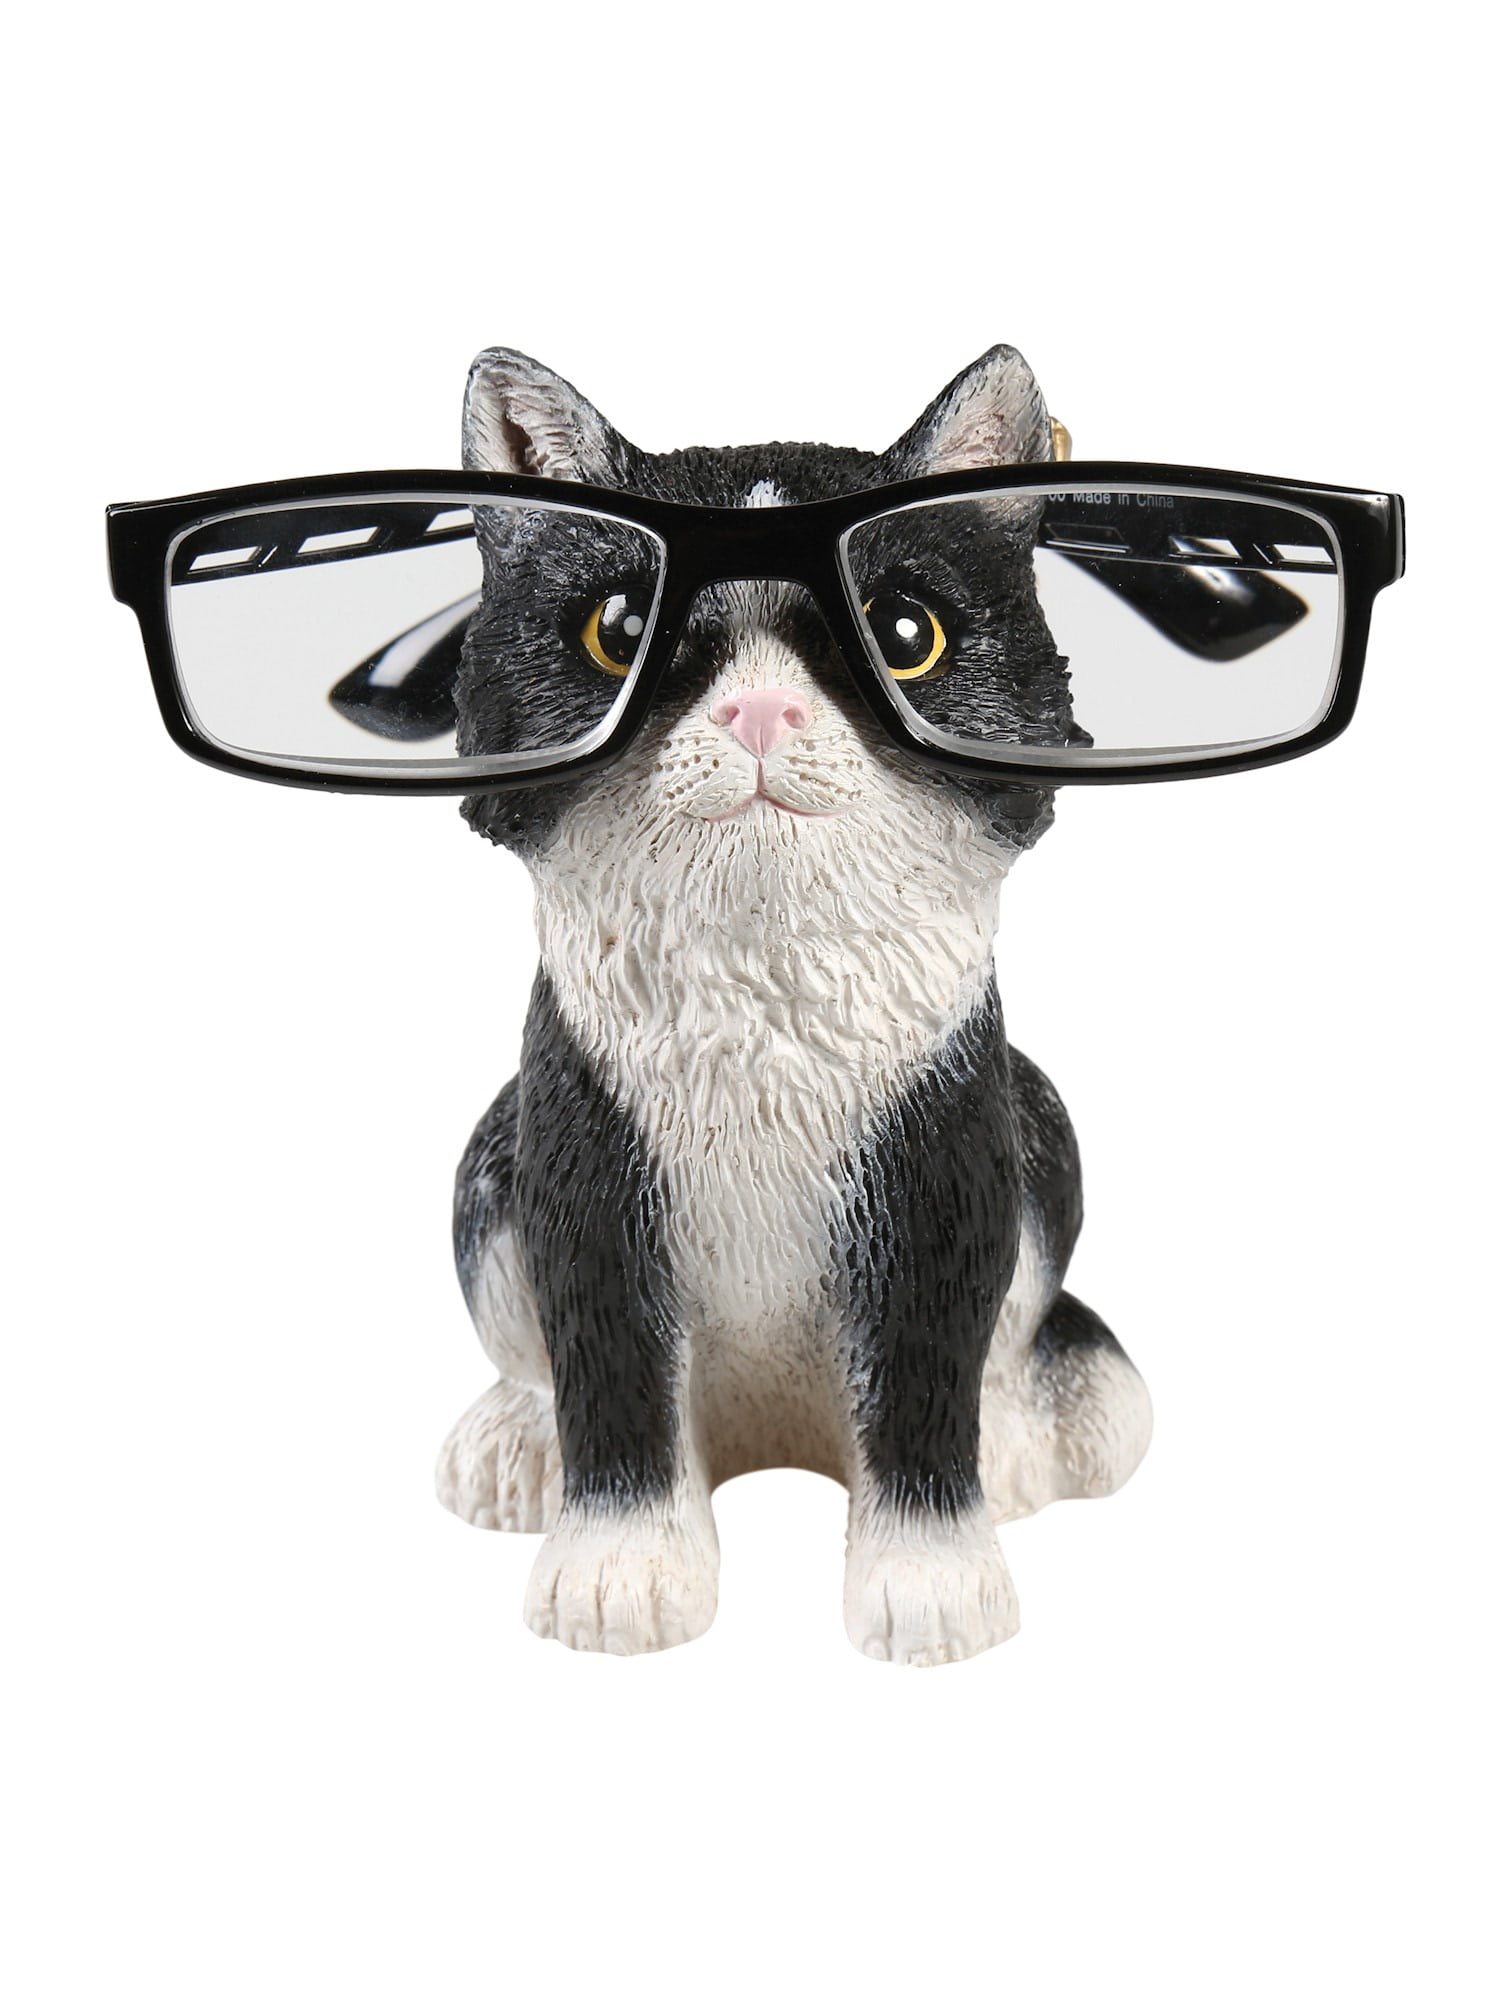 Sunglasses Holder Stand Cats Eyeglass Holders